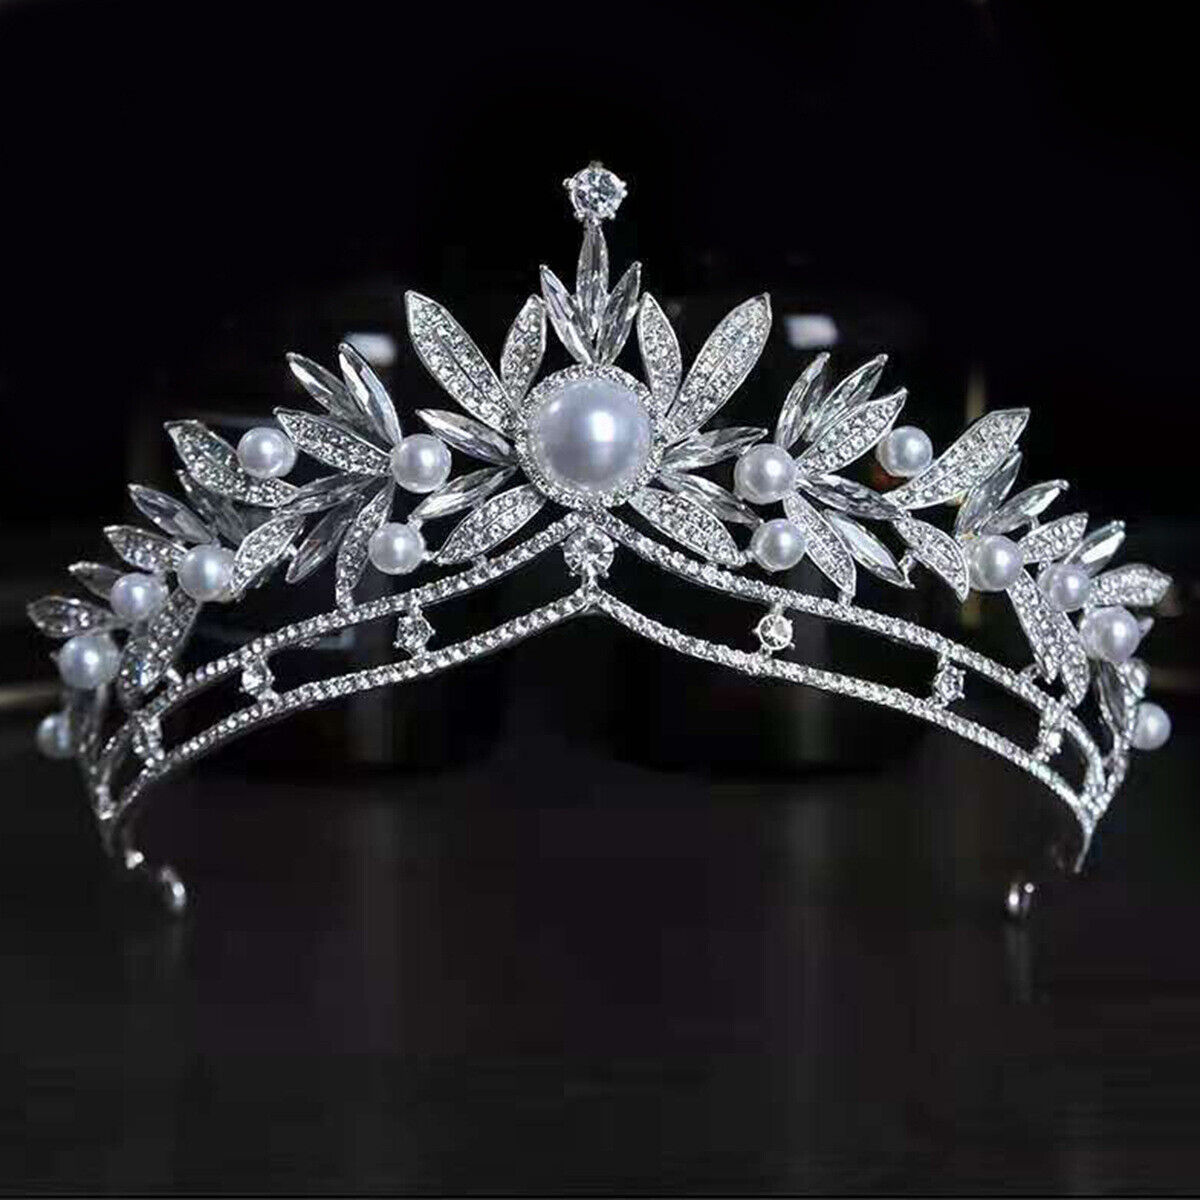 7cm High Pearl Crystal Large Wedding Bridal Queen Princess Prom